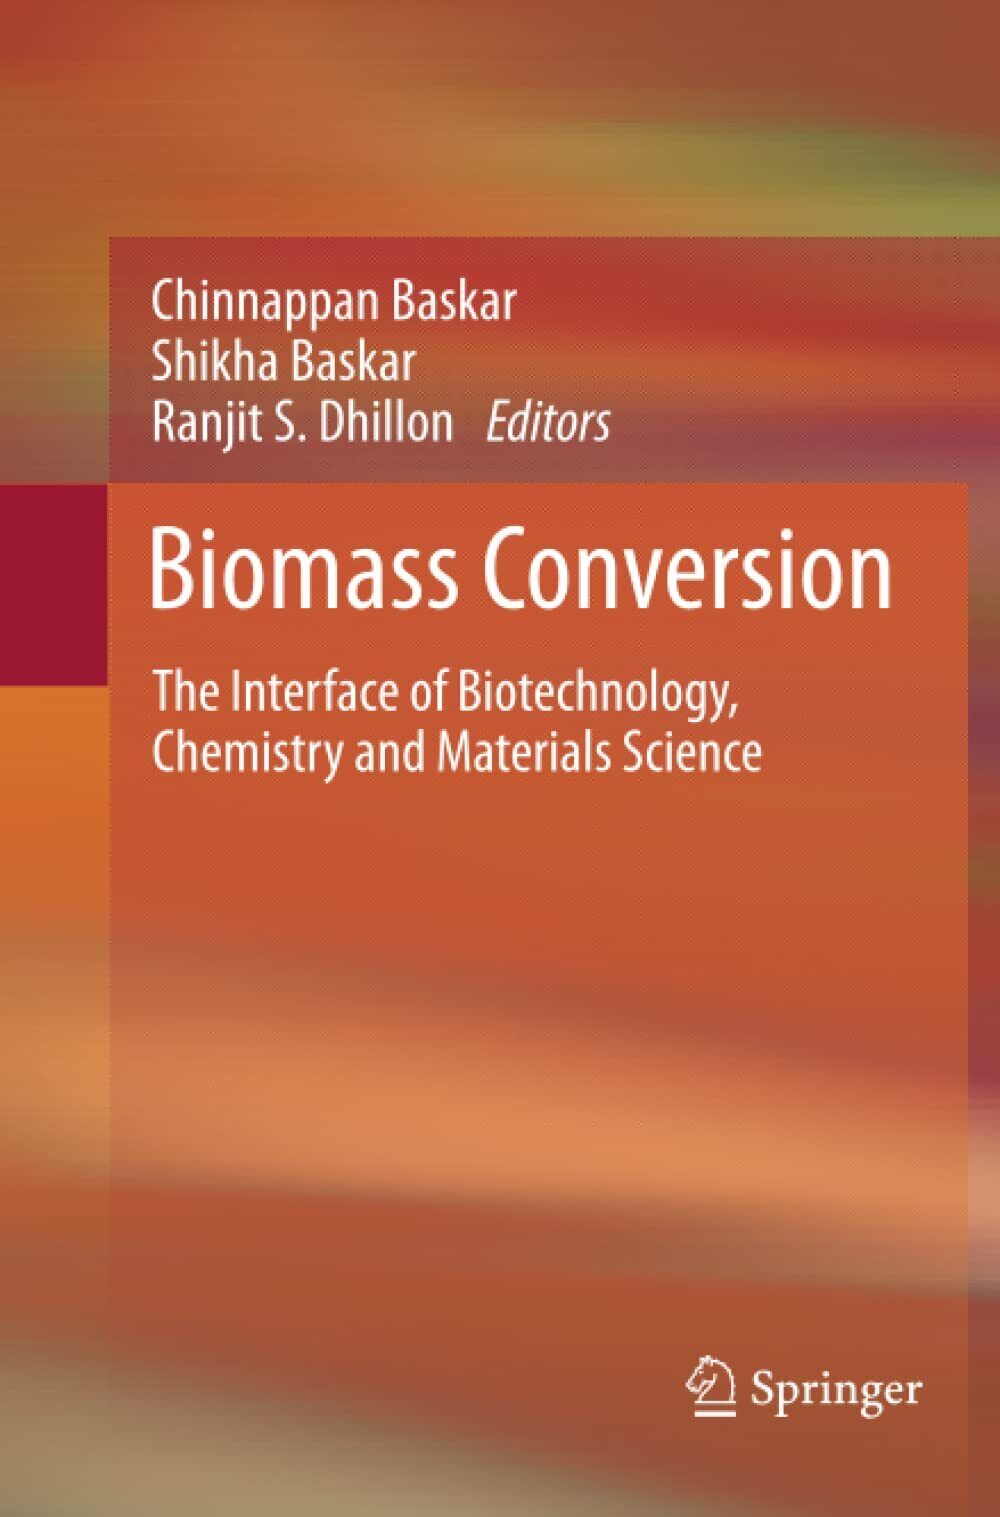 Biomass Conversion - Chinnappan Baskar - Springer, 2014